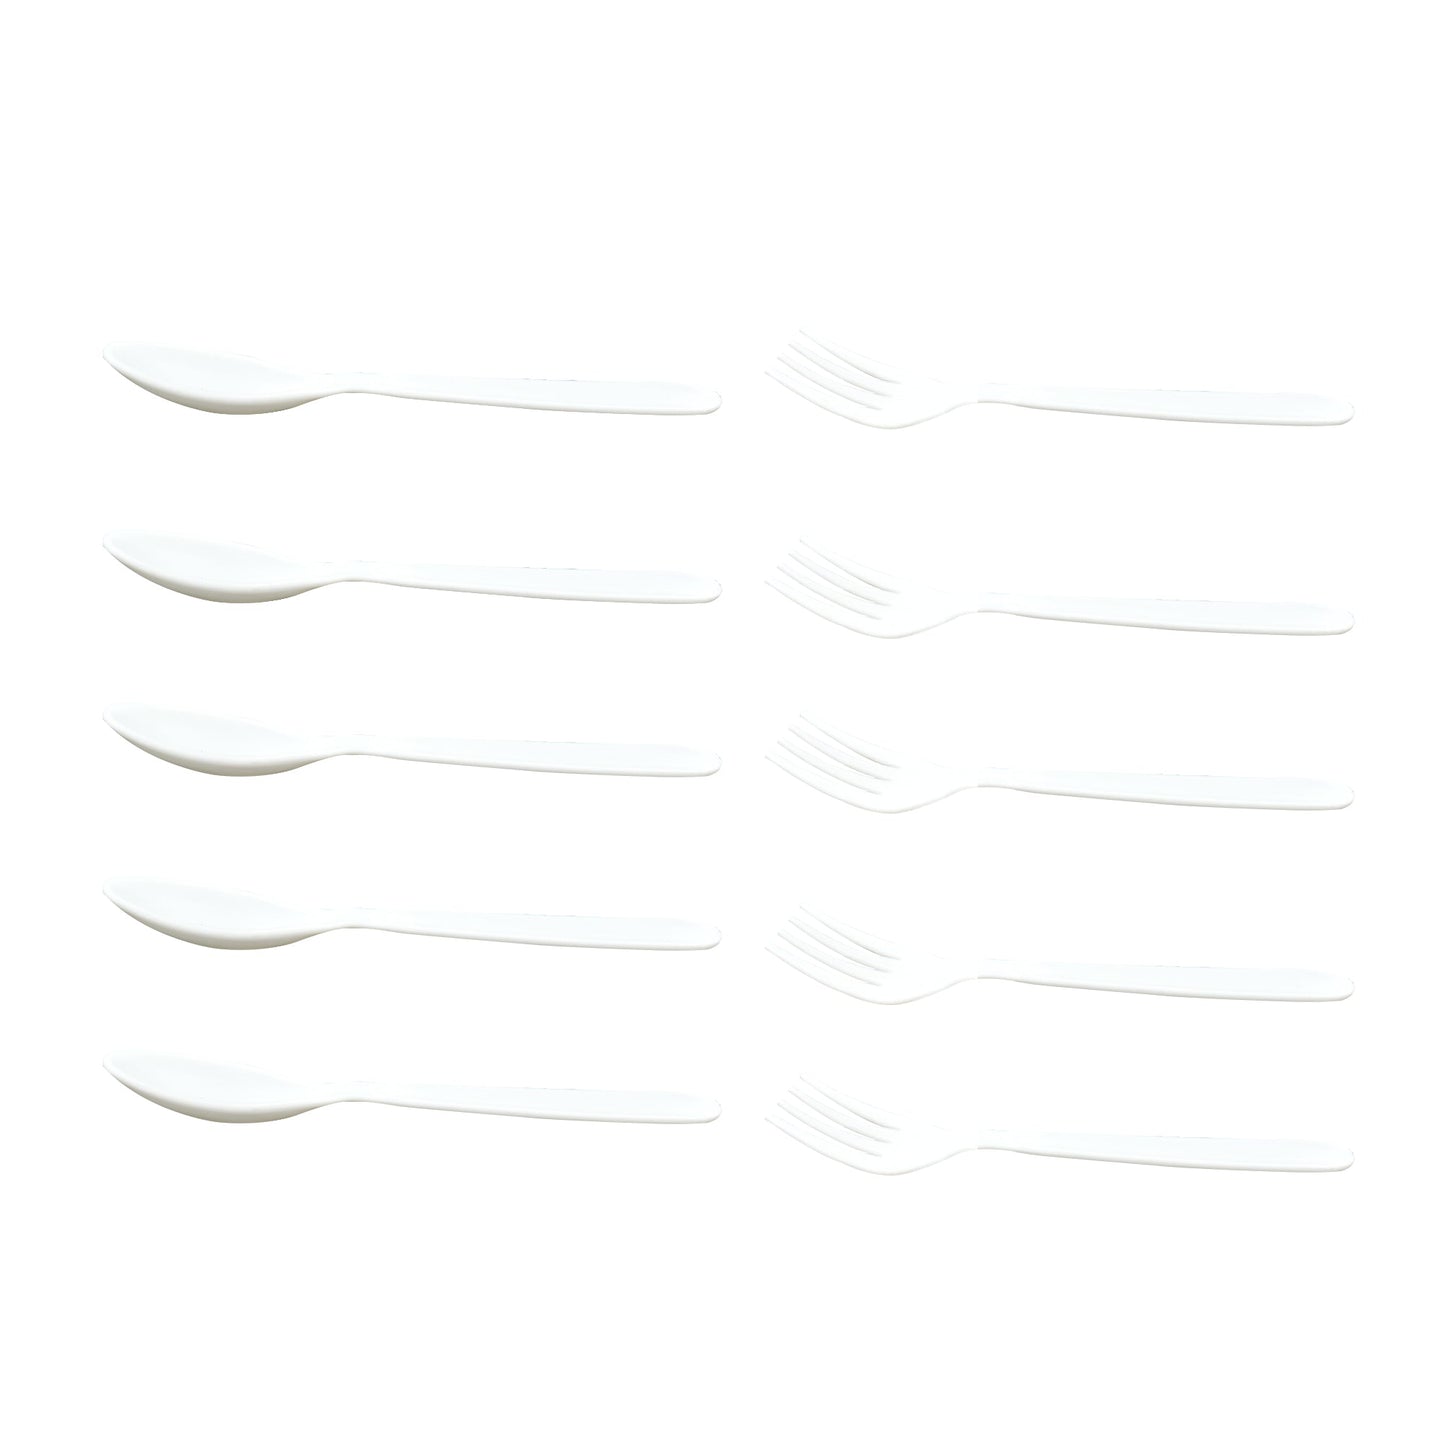 2422 Dinnerware Cutlery Premium Plastic Spoon And Fork Set - 10 pcs DeoDap